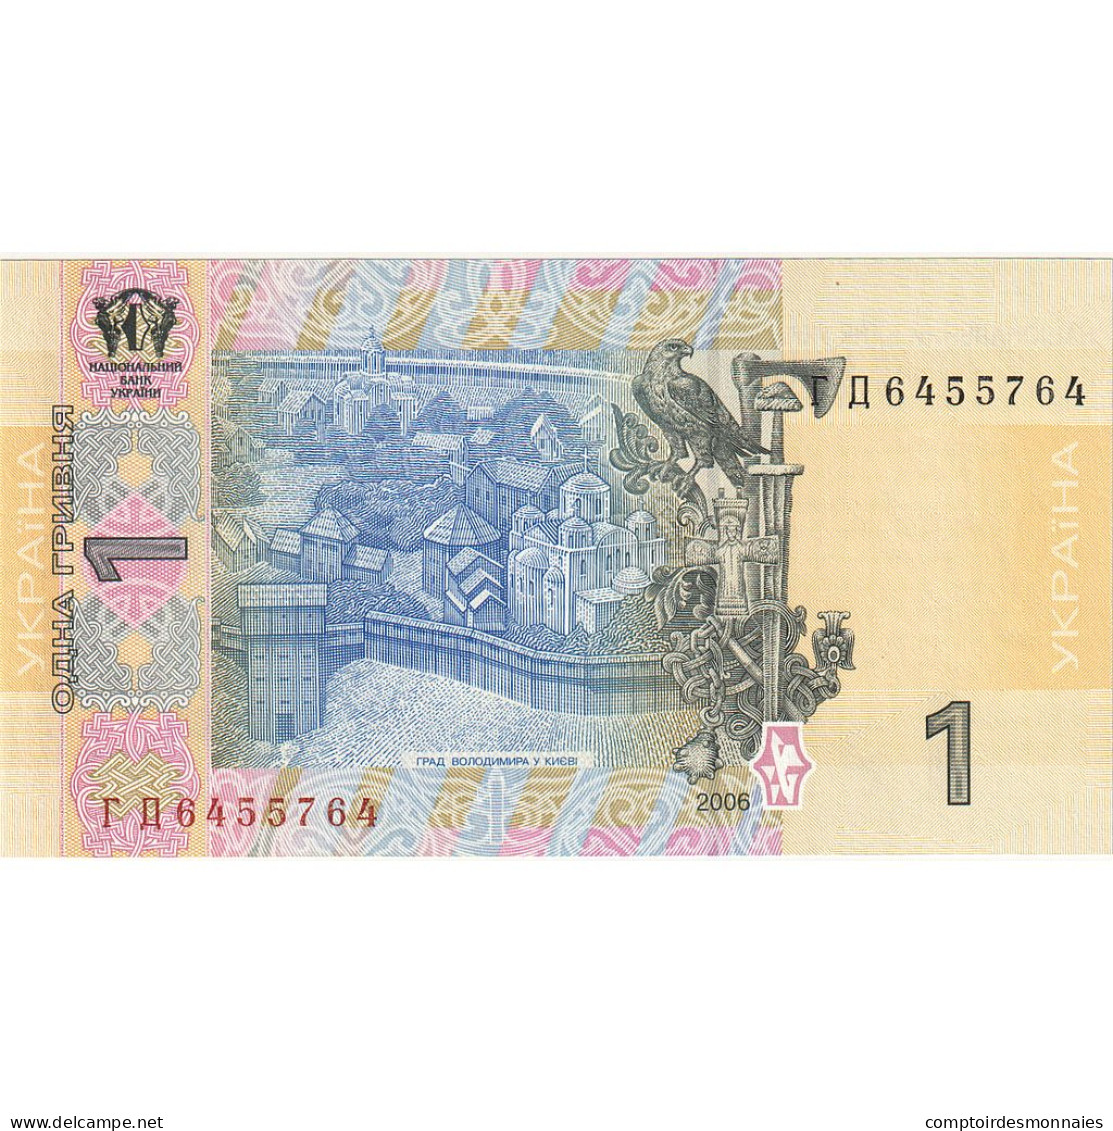 Billet, Ukraine, 1 Hryvnia, 2006, Undated, KM:116Aa, NEUF - Ucraina